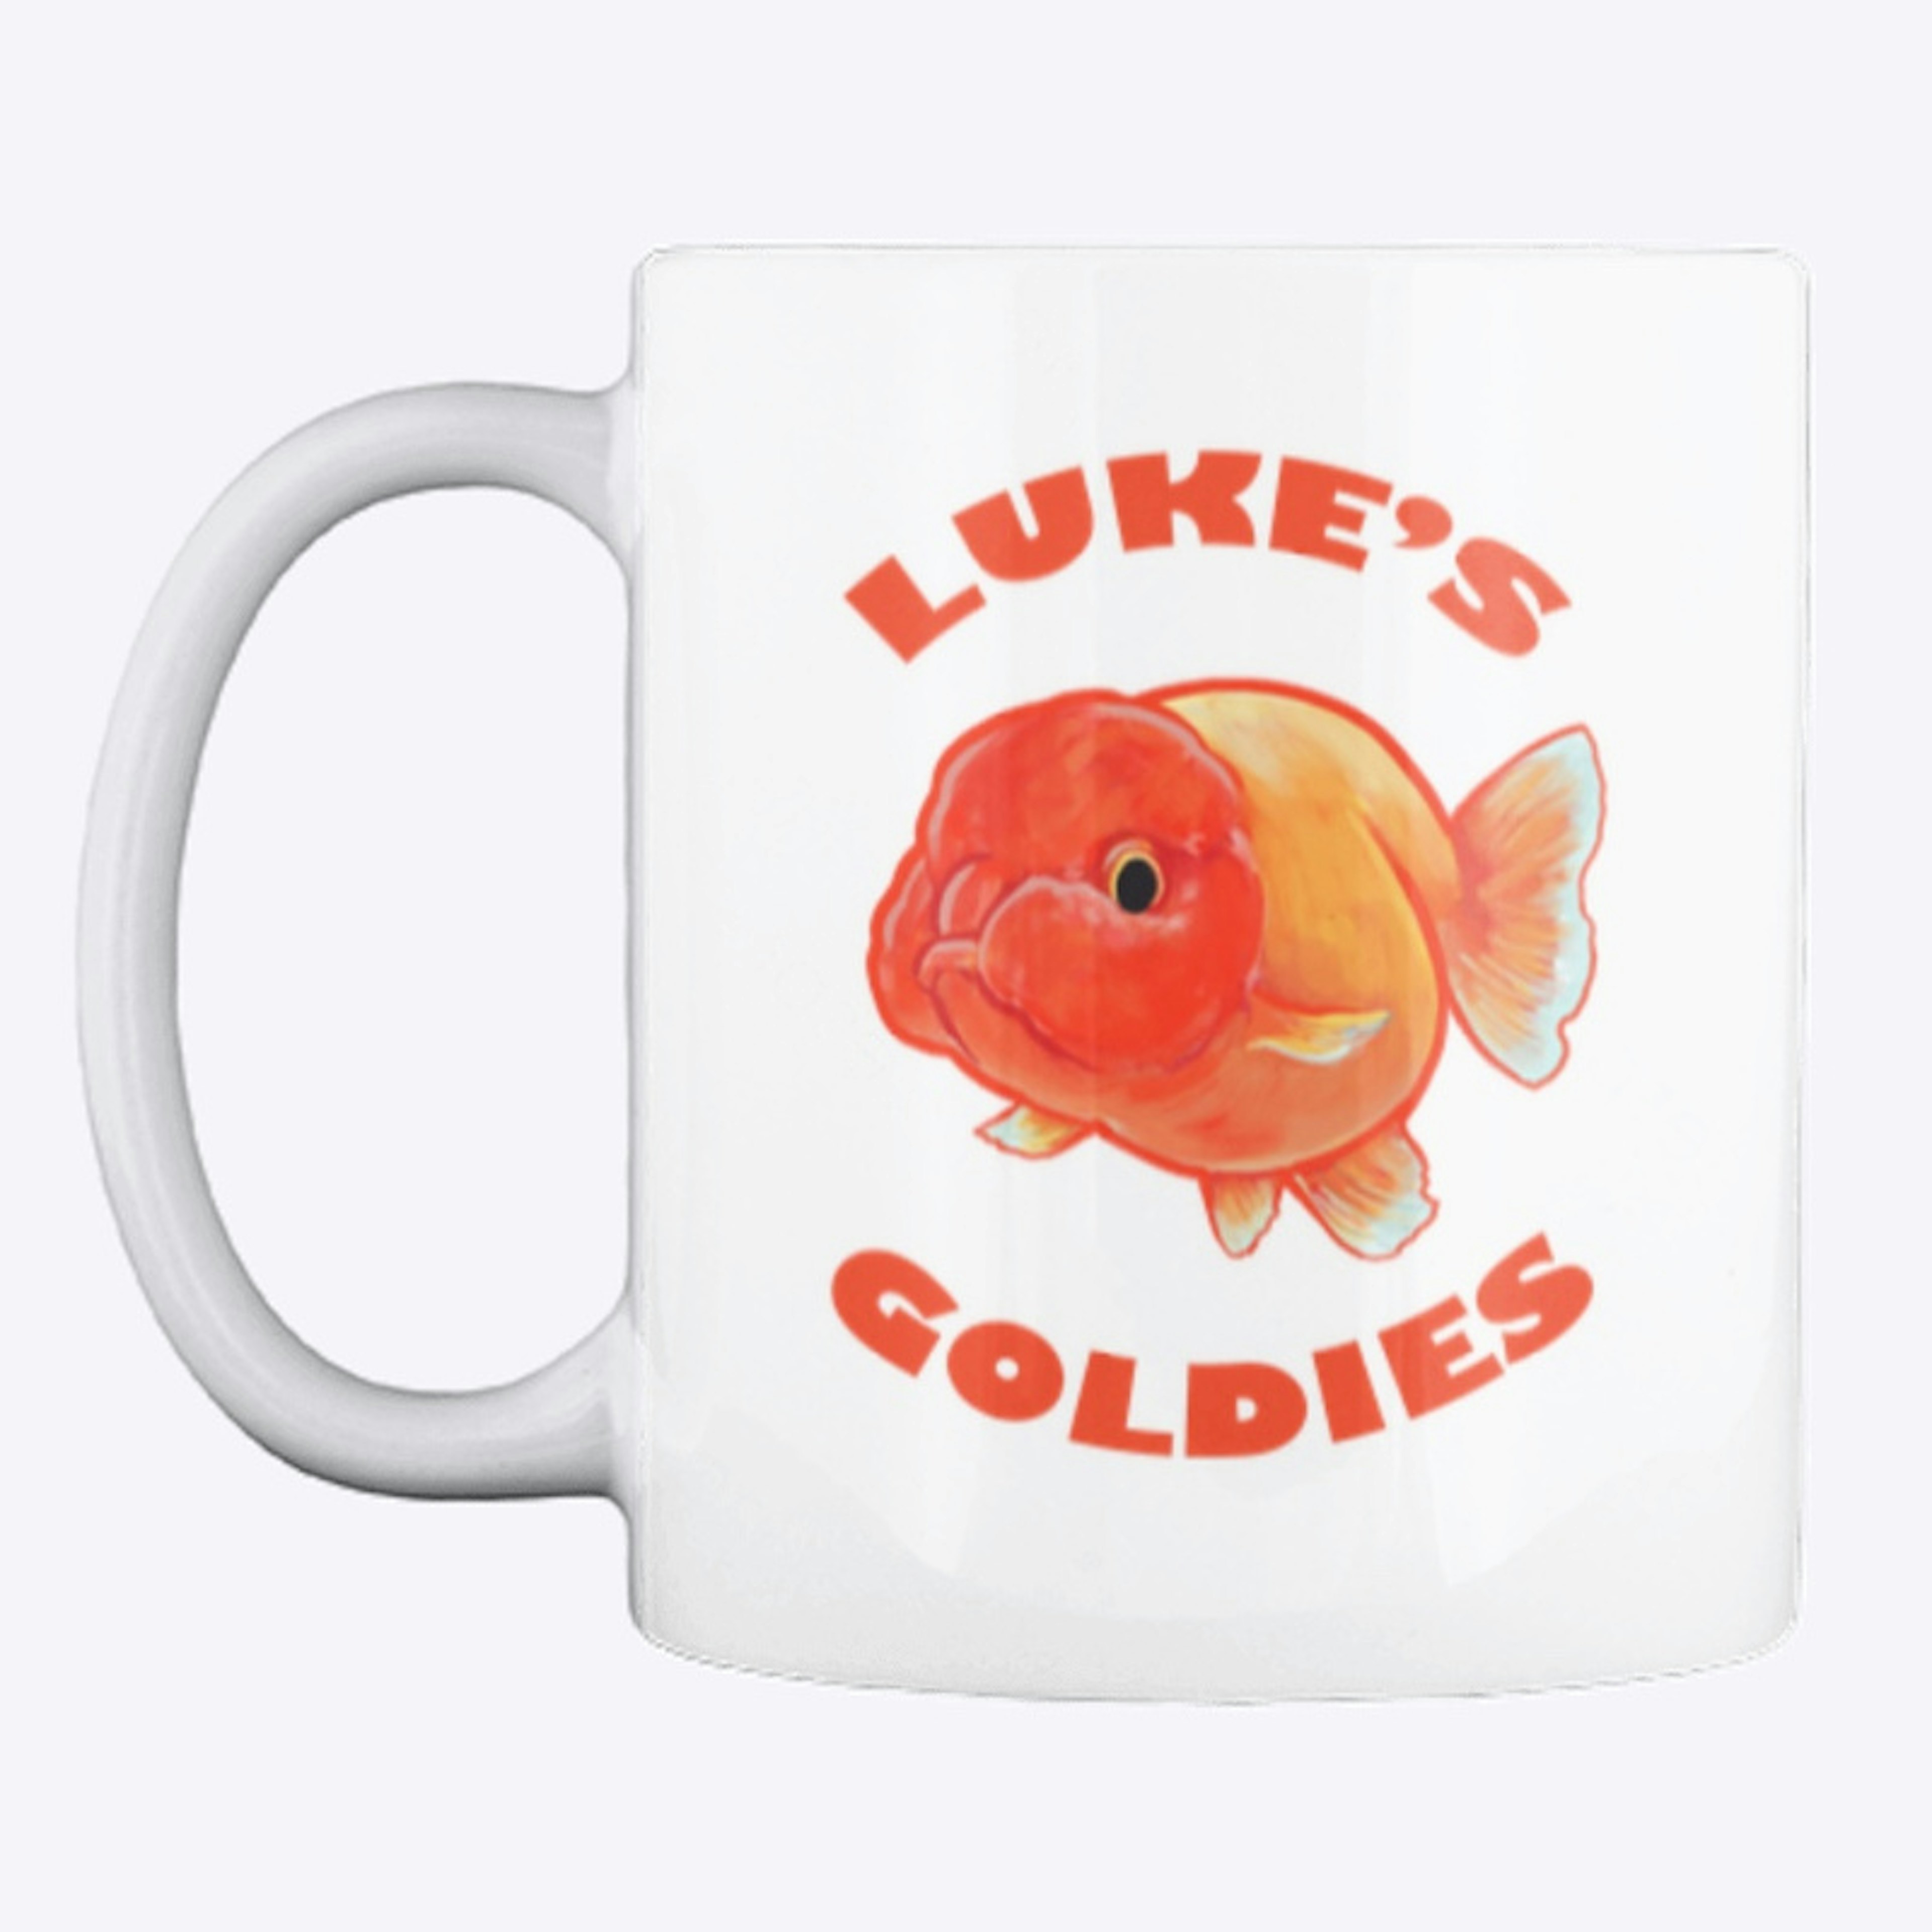 Luke's Goldies New Logo 